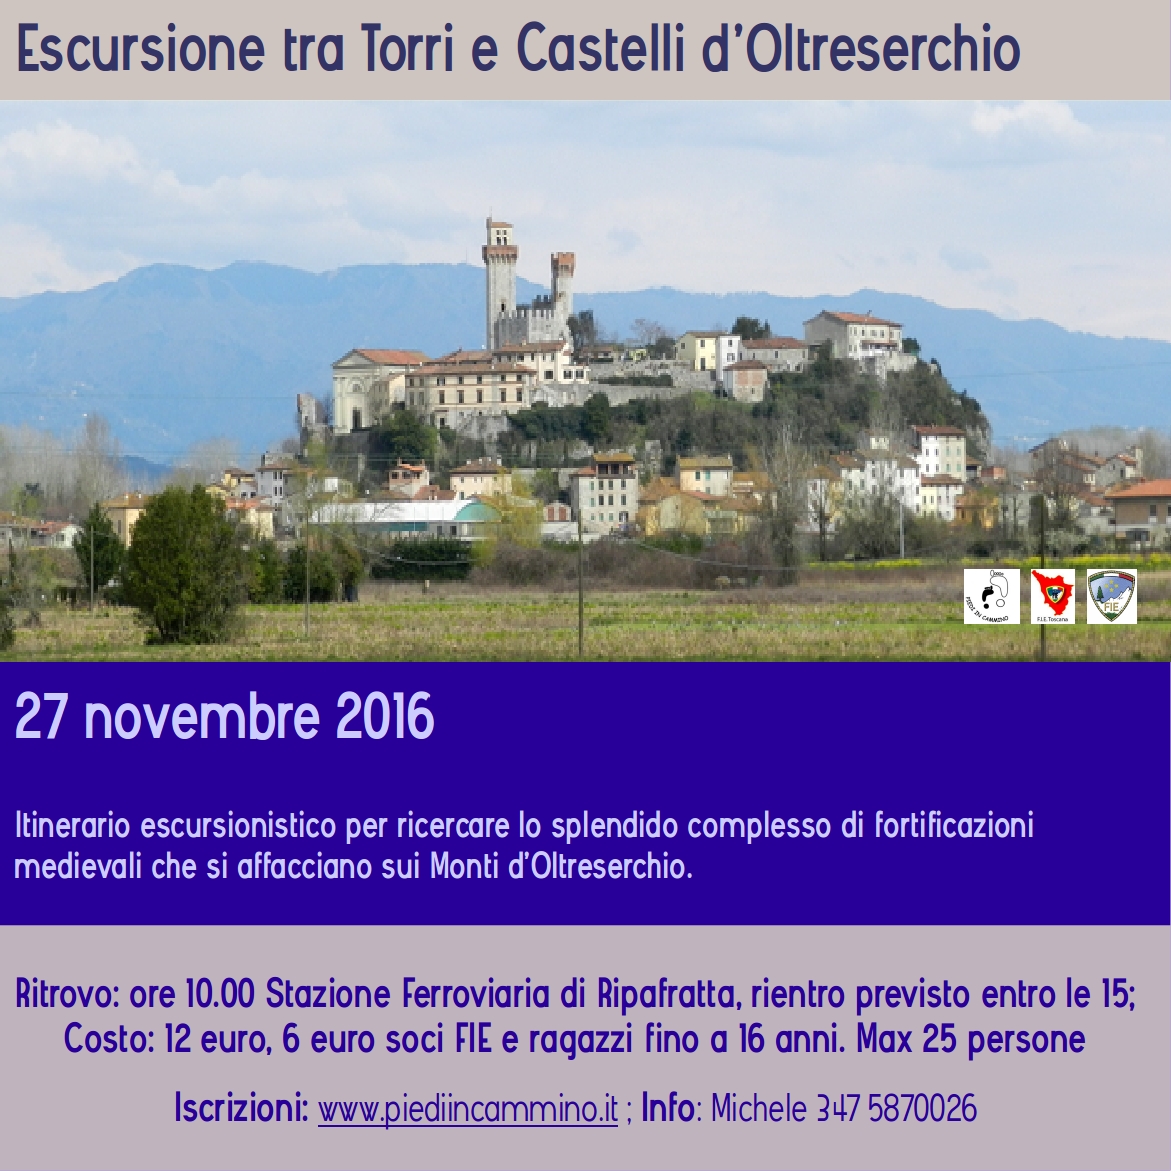 tra-torri-e-castelli-nov-2016-piedi-in-cammino